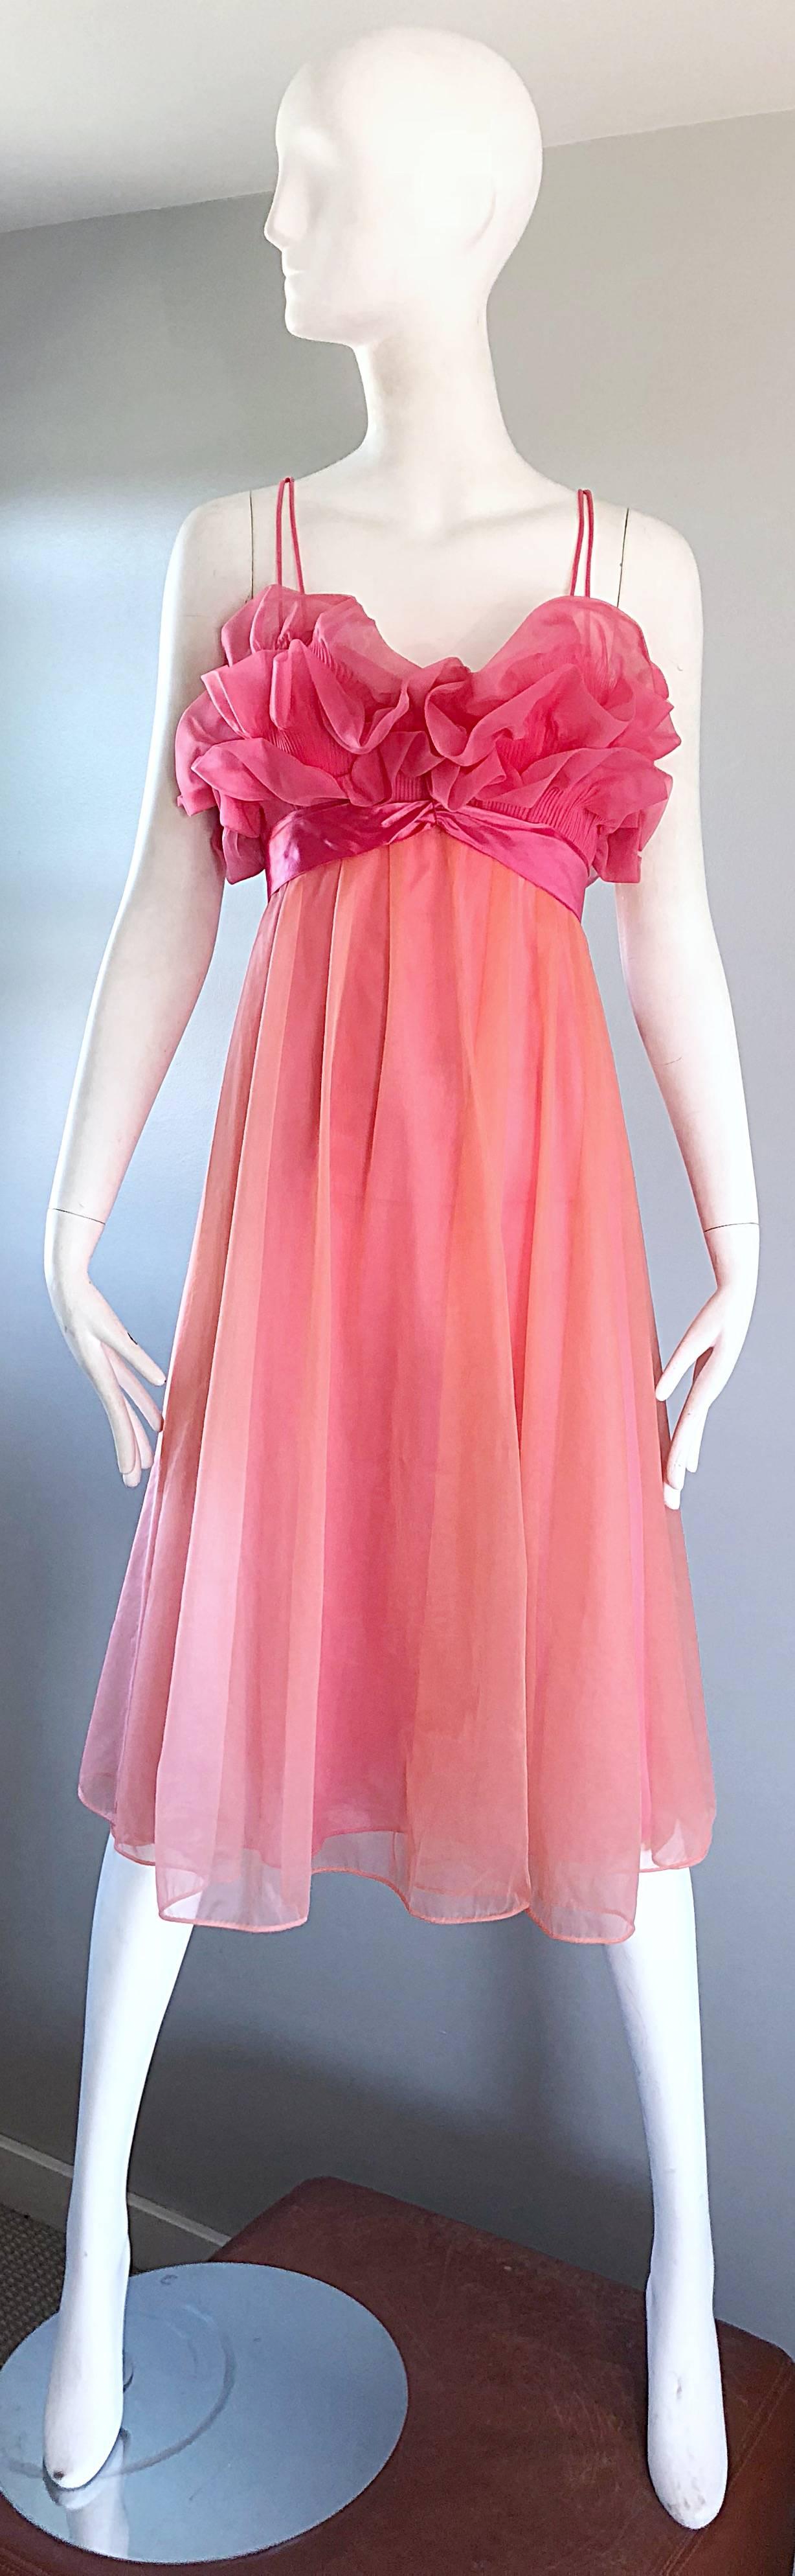 1960s Vanity Fair Negligee Peignoir Hot Pink Ruffled Nightgown Dress 3